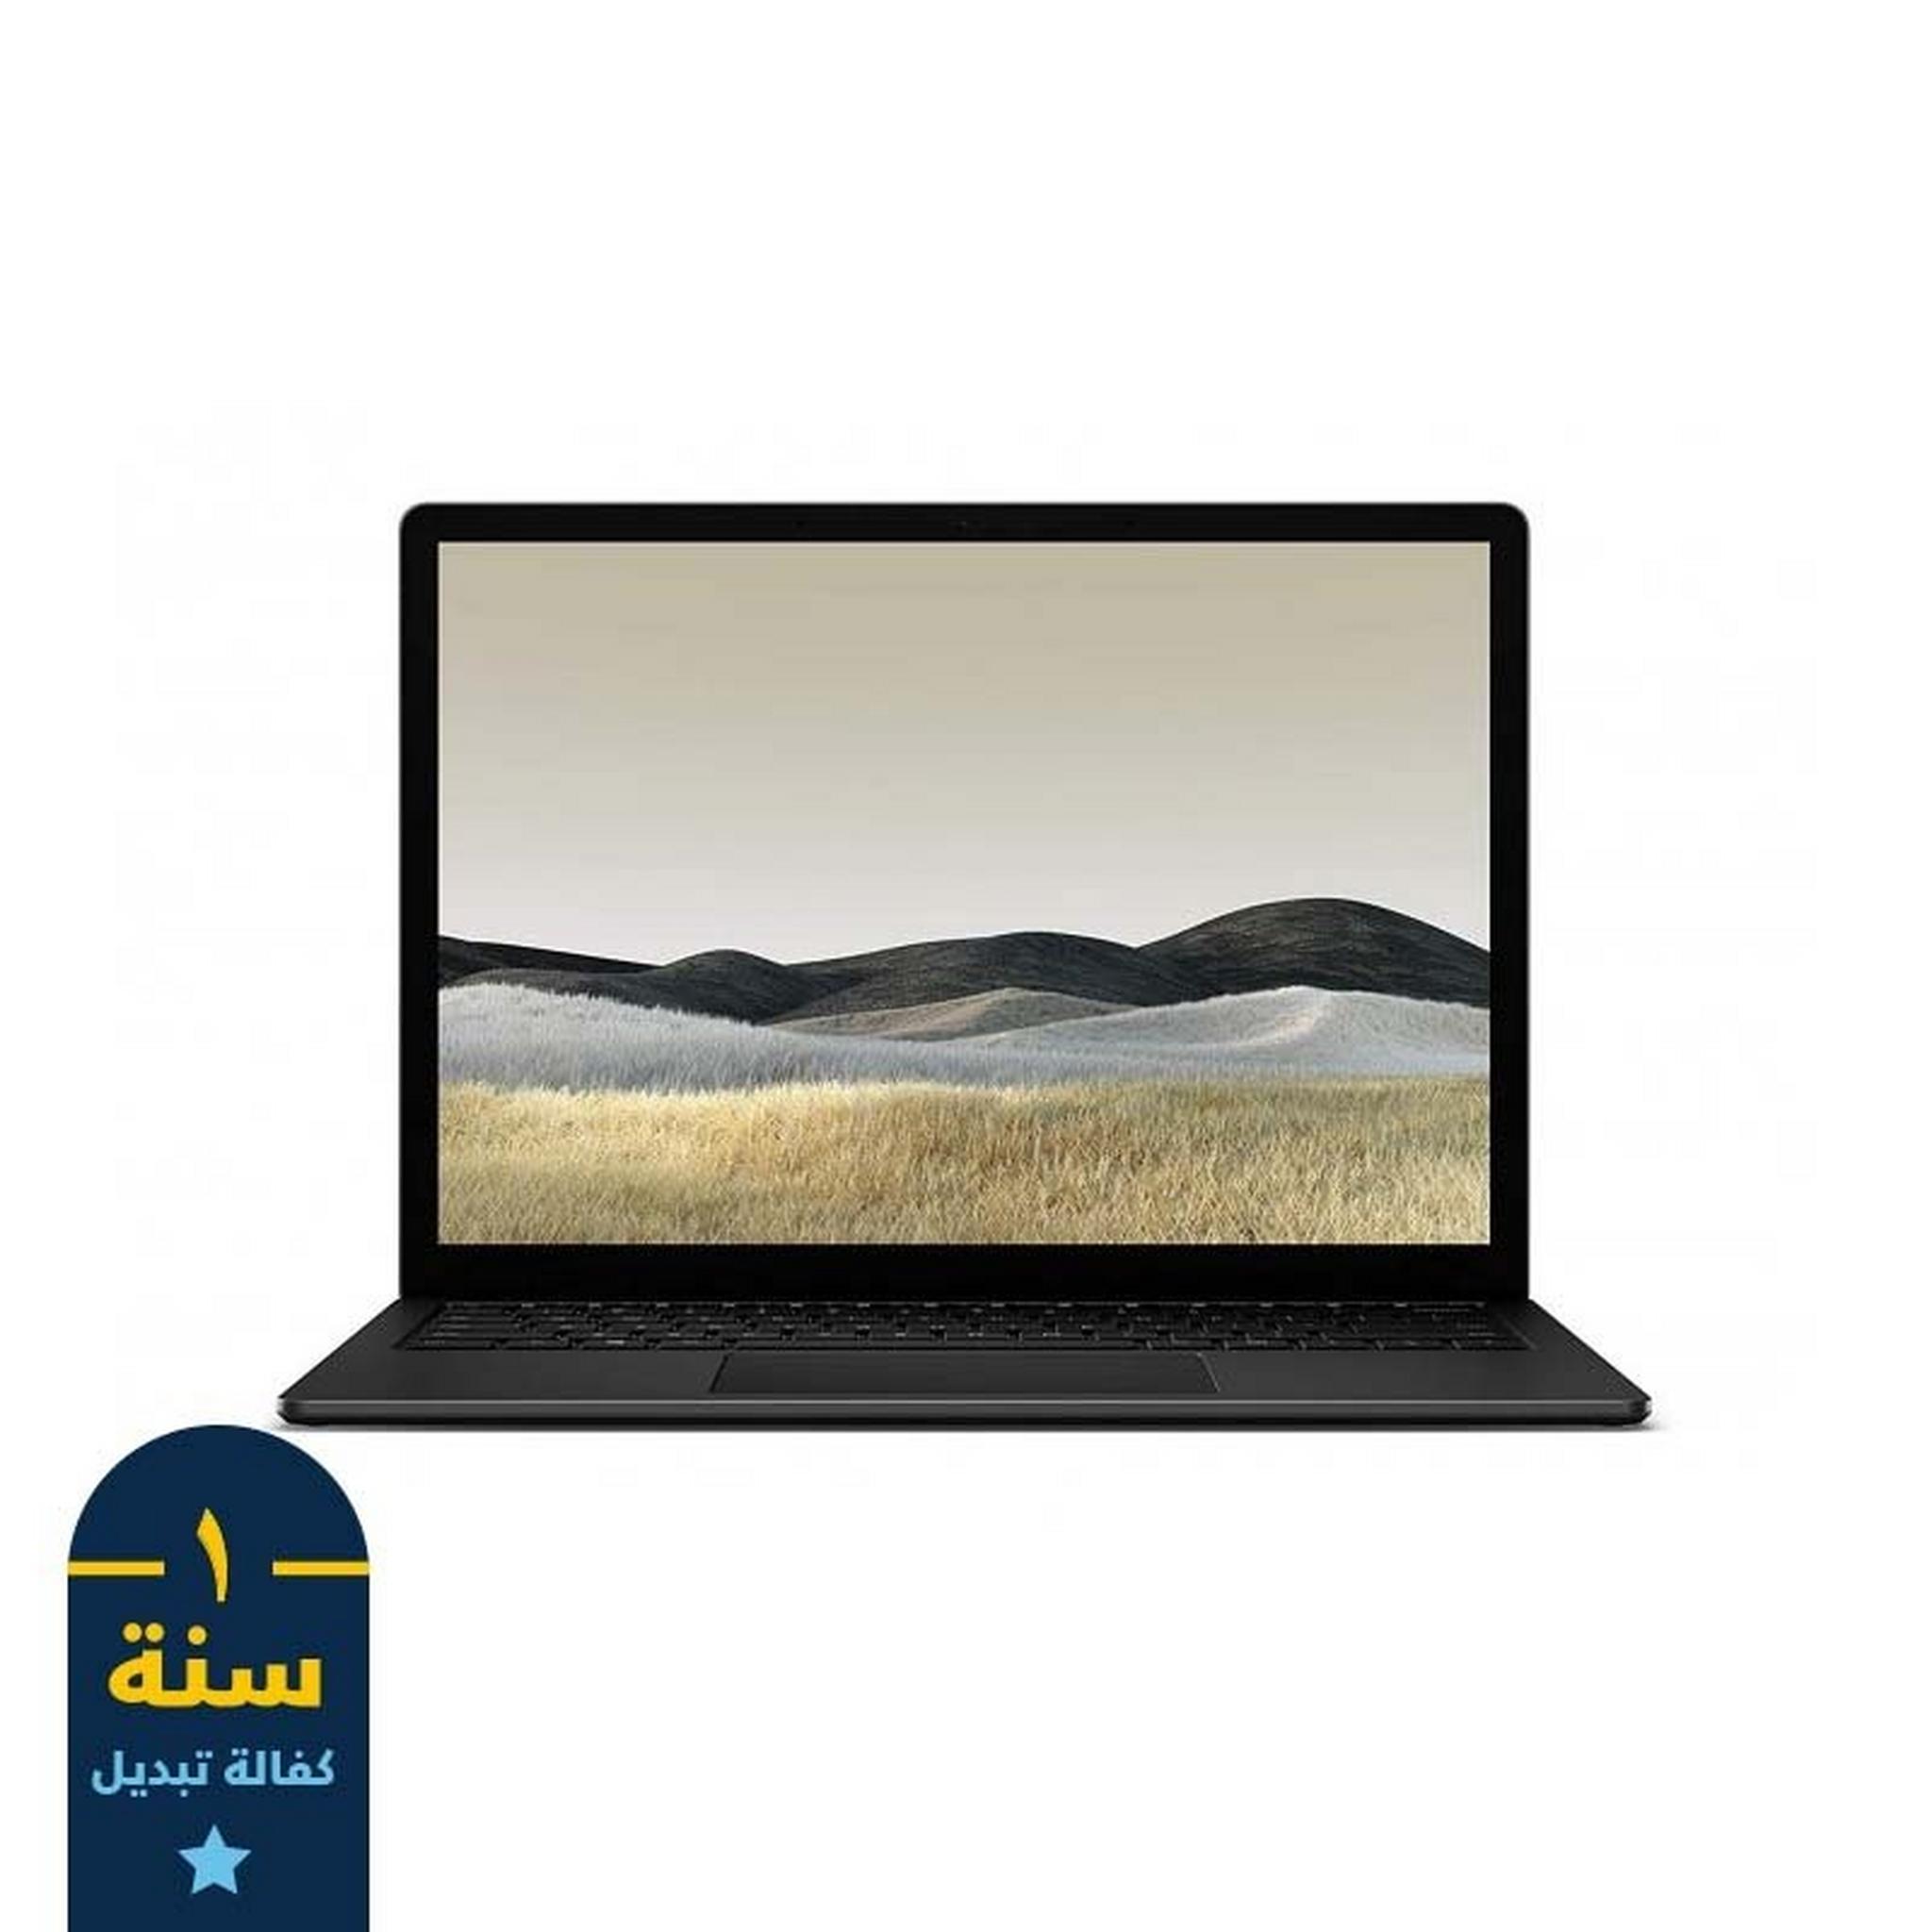 Microsoft Surface Laptop 3 AMD Ryzen R5-3580U 16GB RAM 256GB SSD 15-inch Laptop - Black